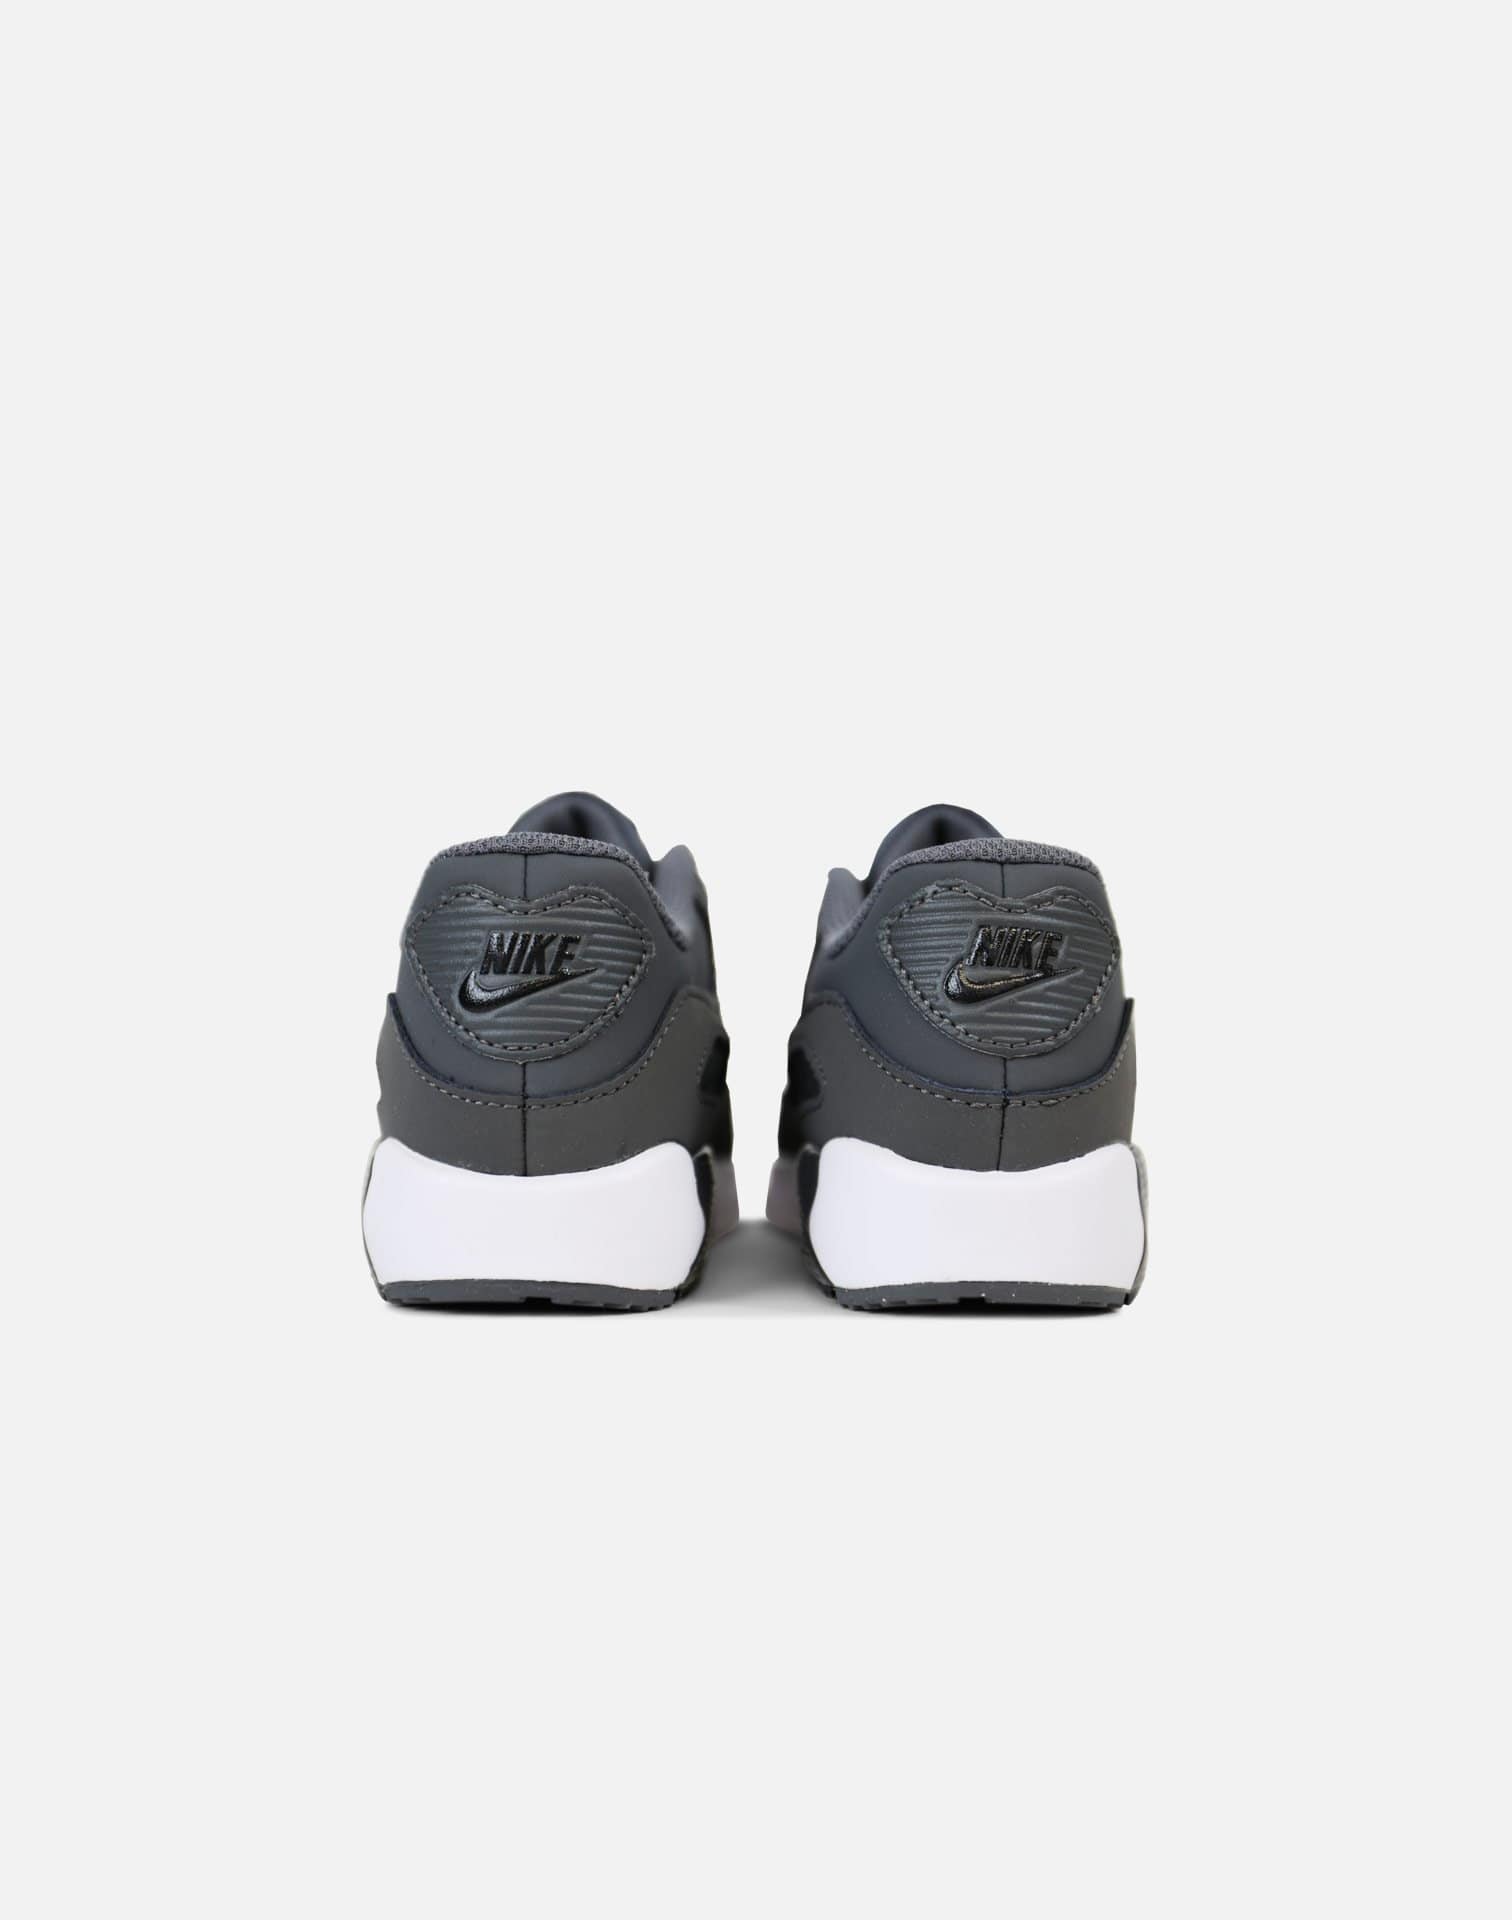 Nike Air Max '90 Leather Infant (Dark Grey/Dark Grey-Black)